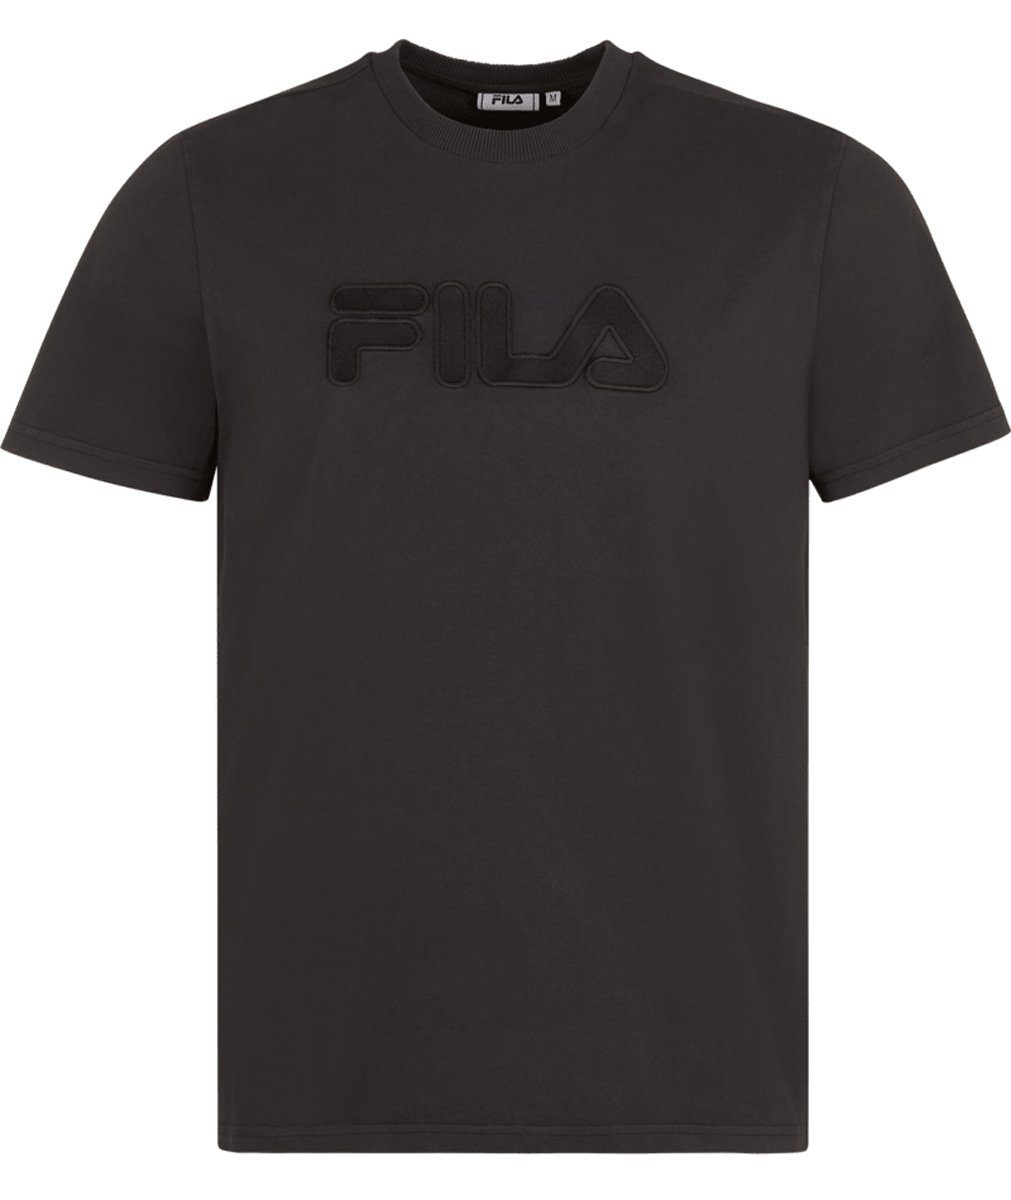 Fila T-Shirt Herren T-Shirt BUEK - Rundhals, Kurzarm